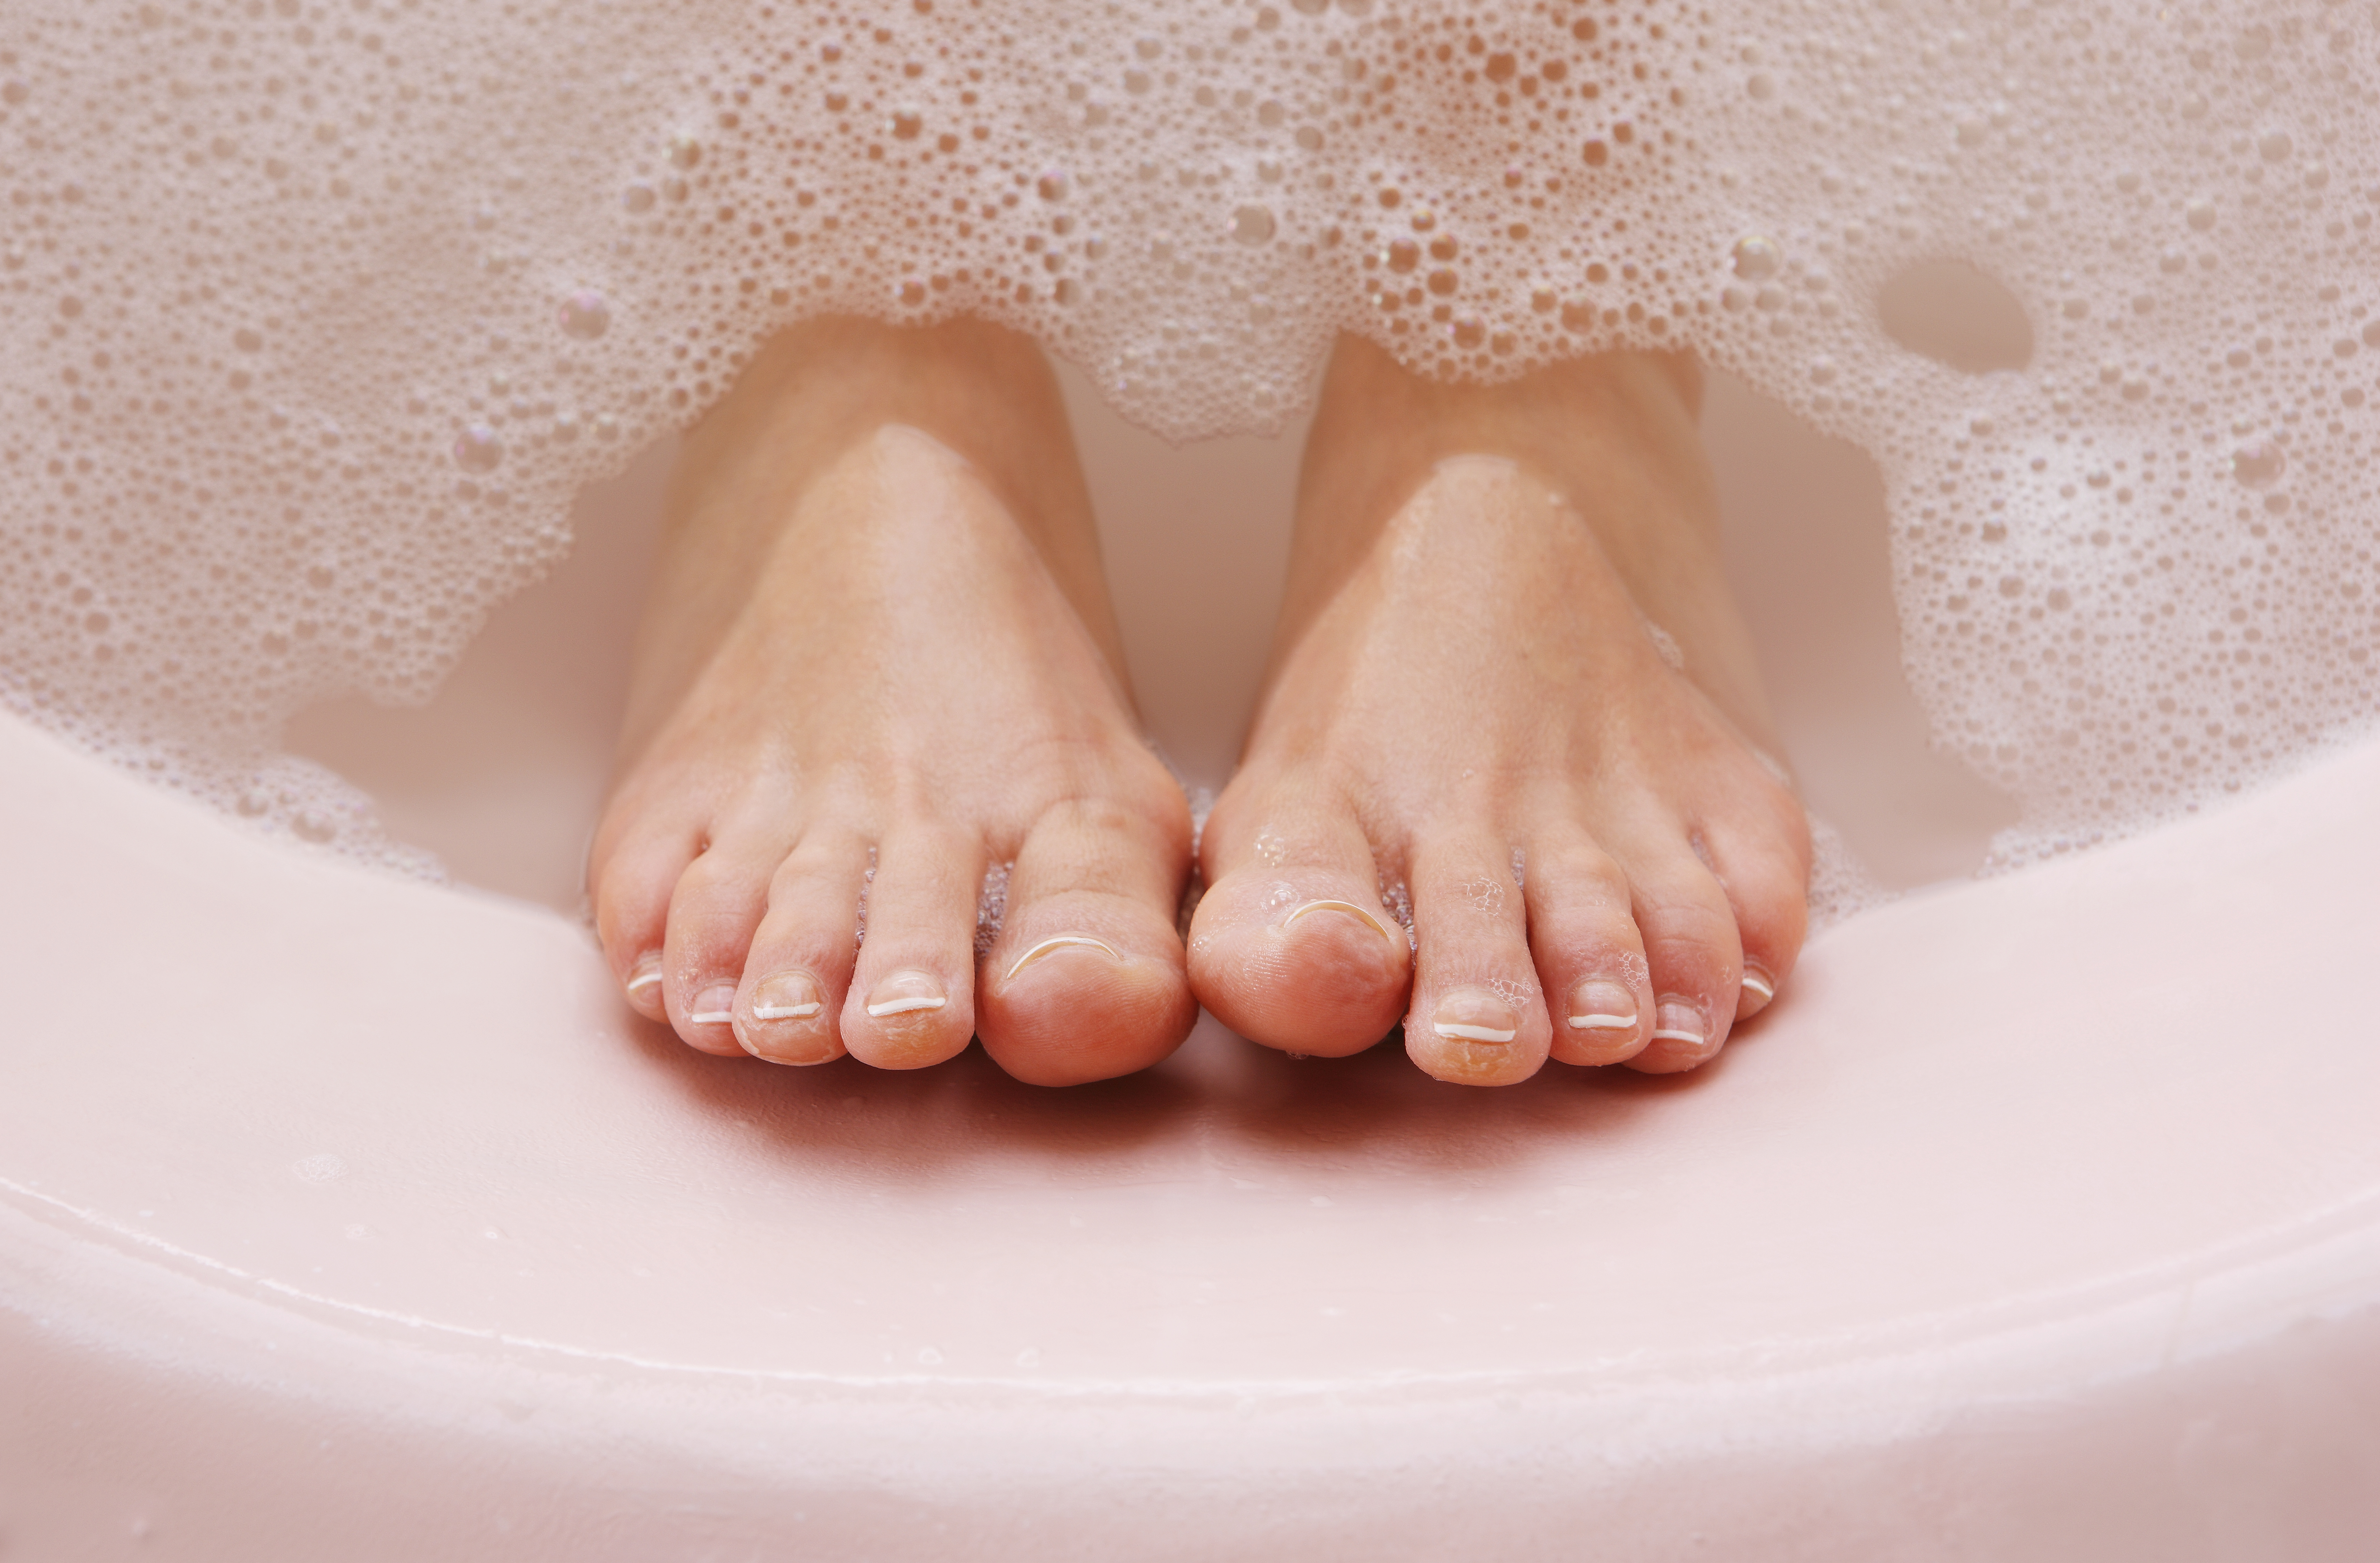 soaking feet to get rid of dead skin